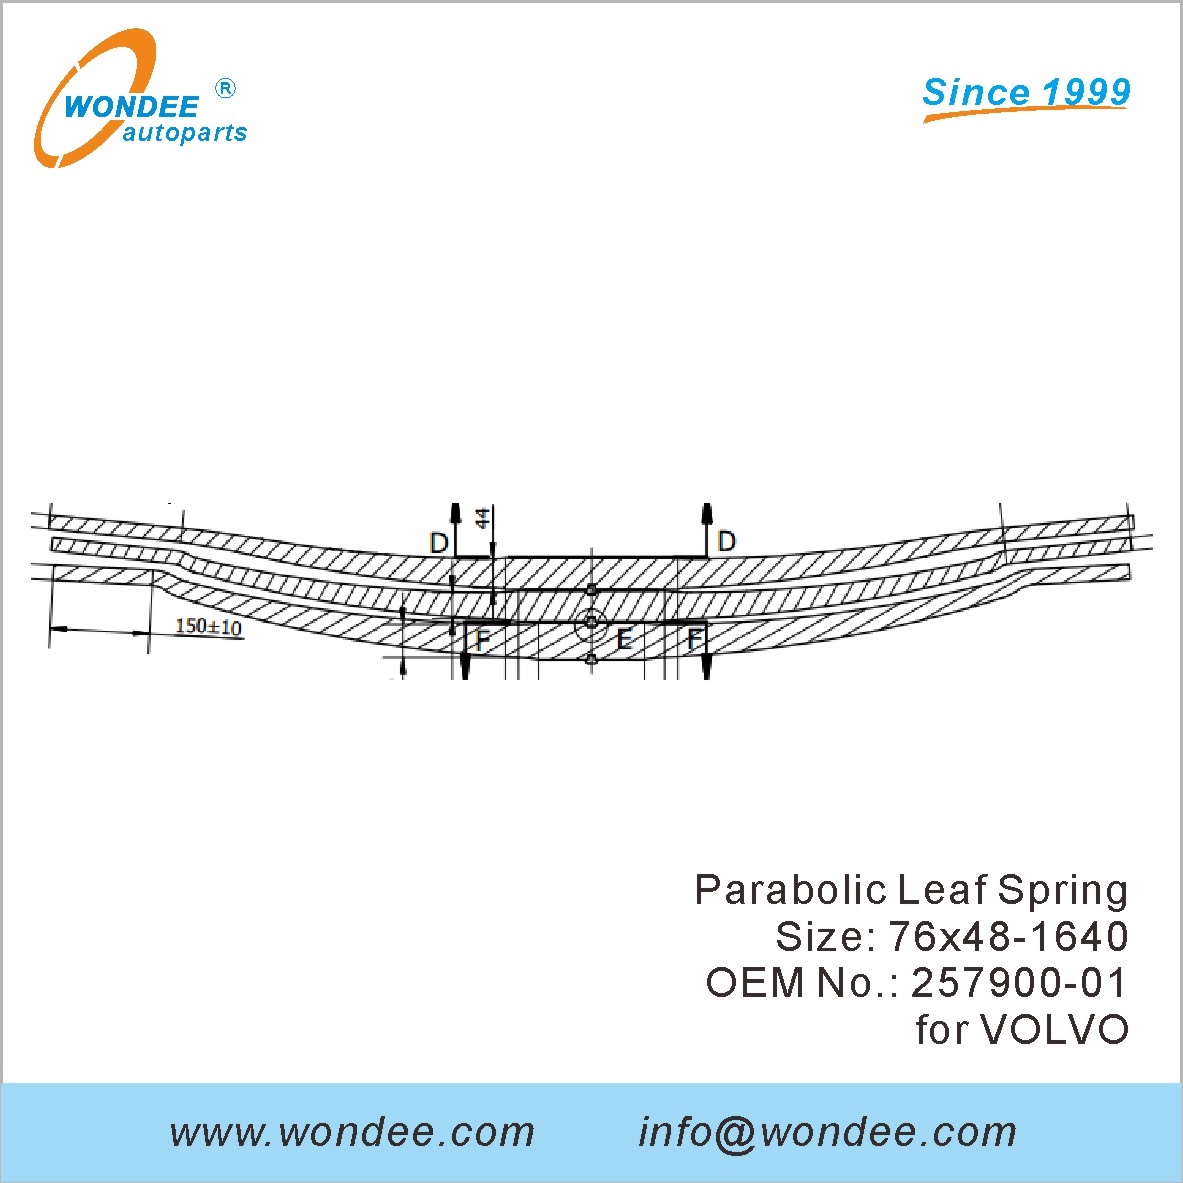 WONDEE heavy duty parabolic Leaf Spring OEM 257900-01 for VOLVO